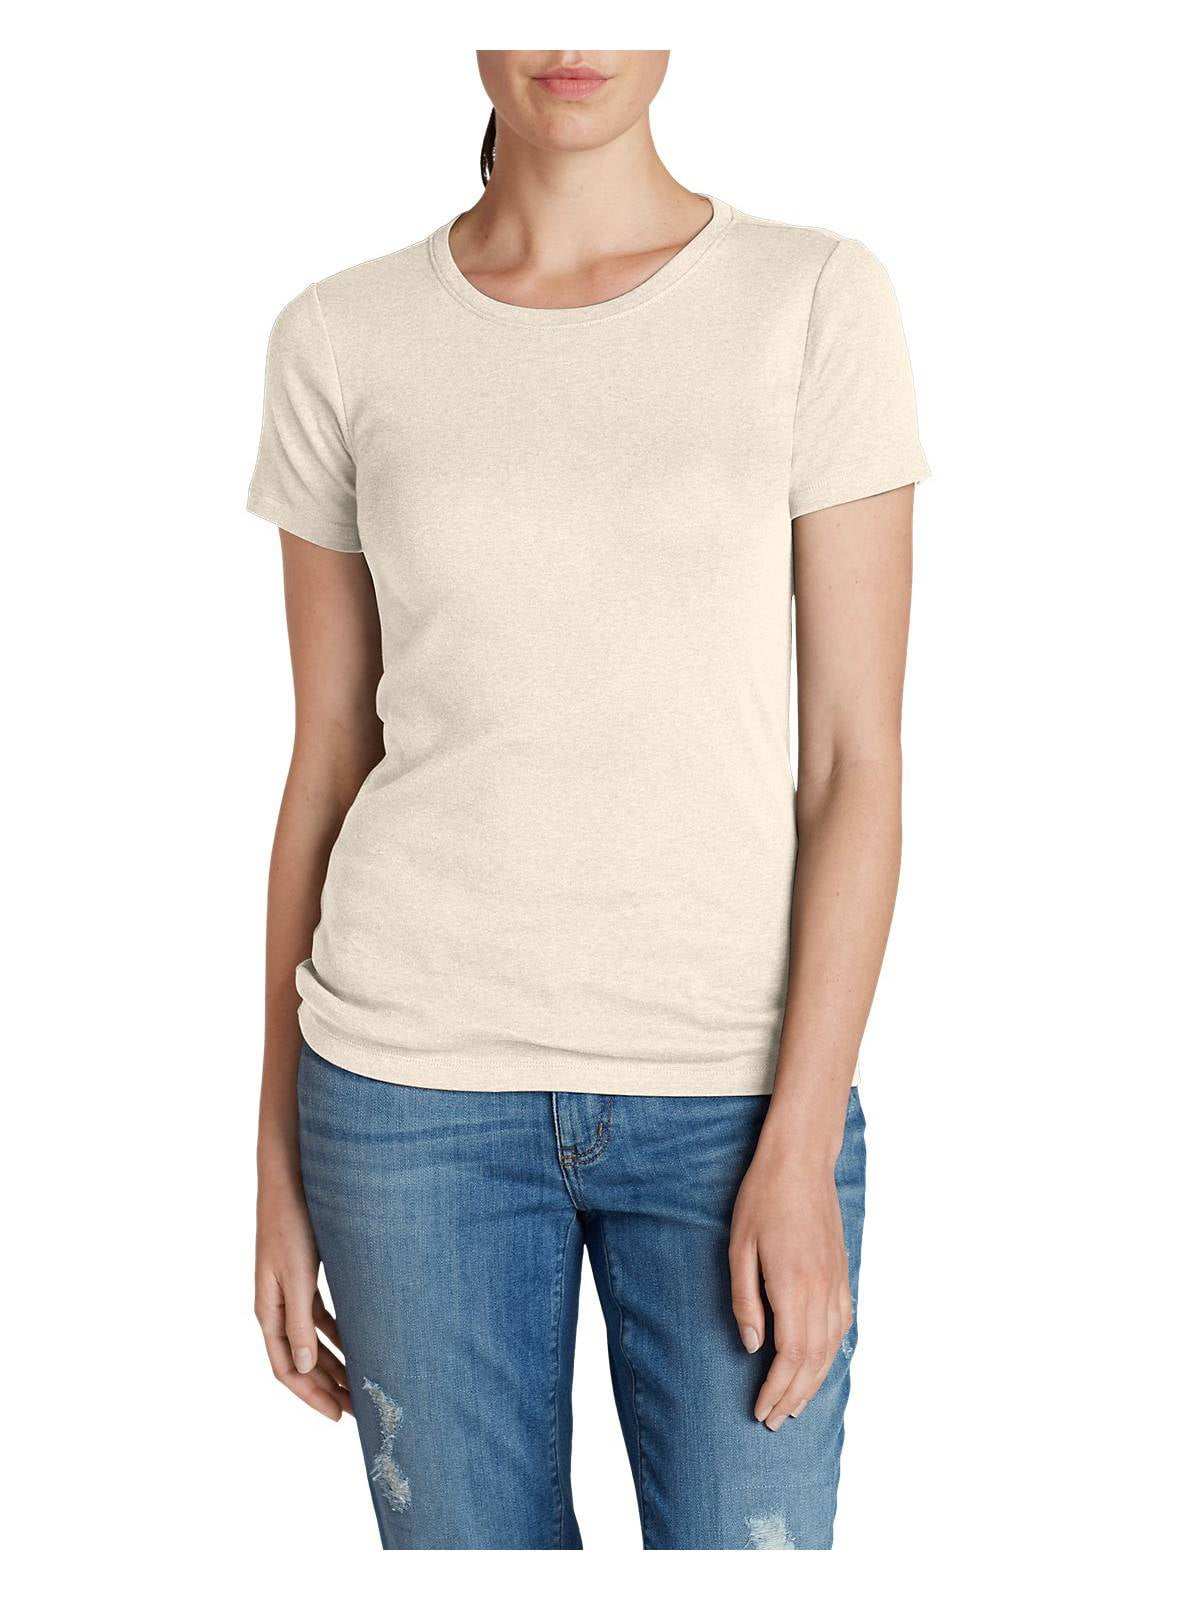 HTR Oatmeal Petite L Eddie Bauer Womens Favorite Short-Sleeve Crewneck T-Shirt